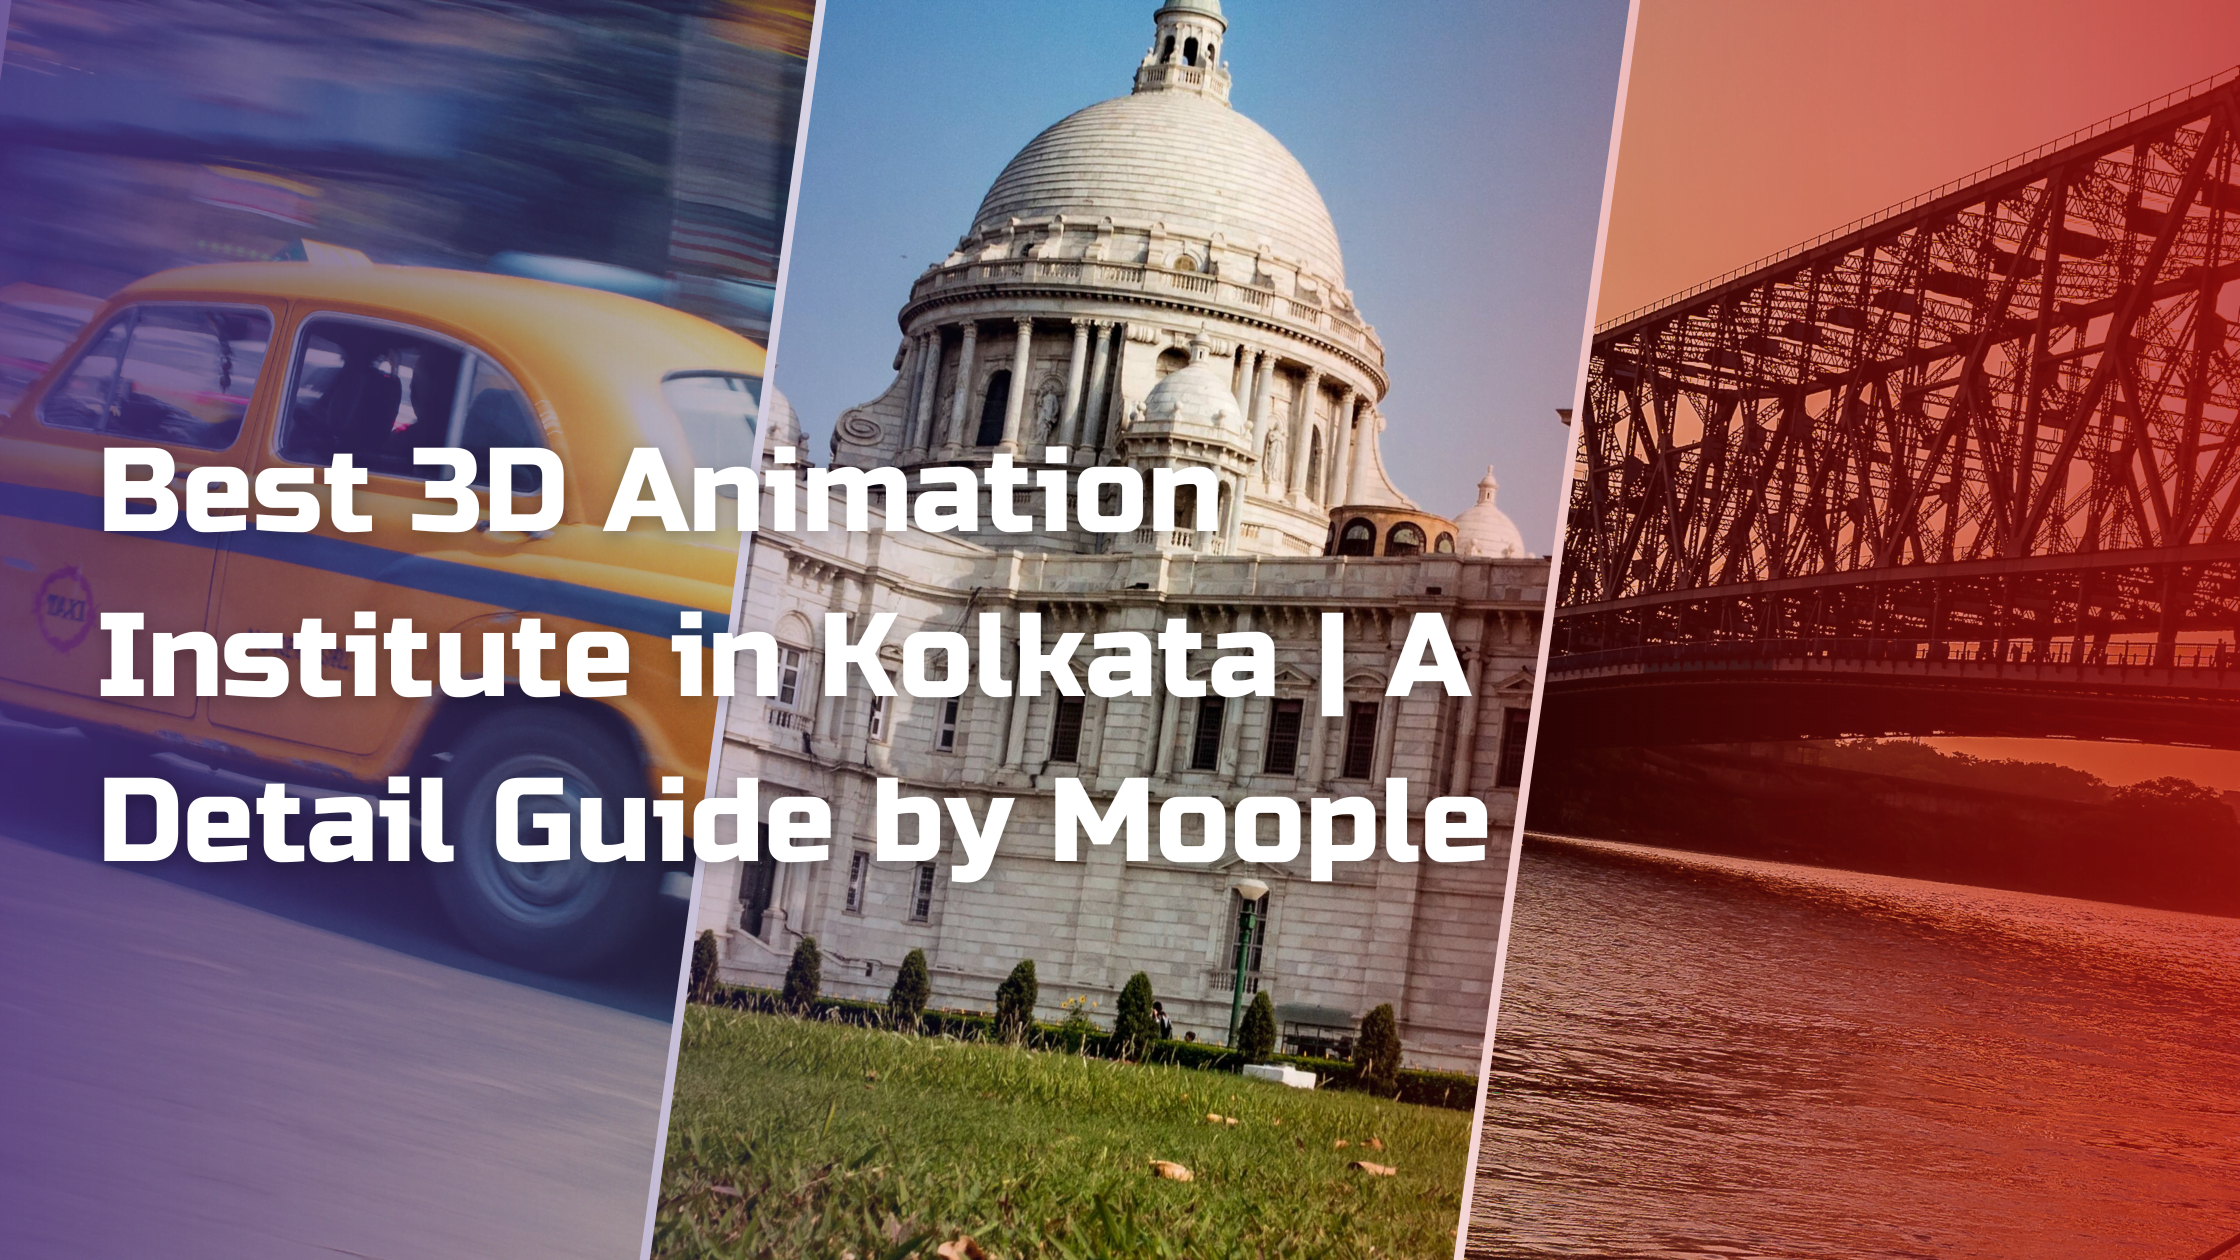 Best 3D animation training institute in Kolkata.